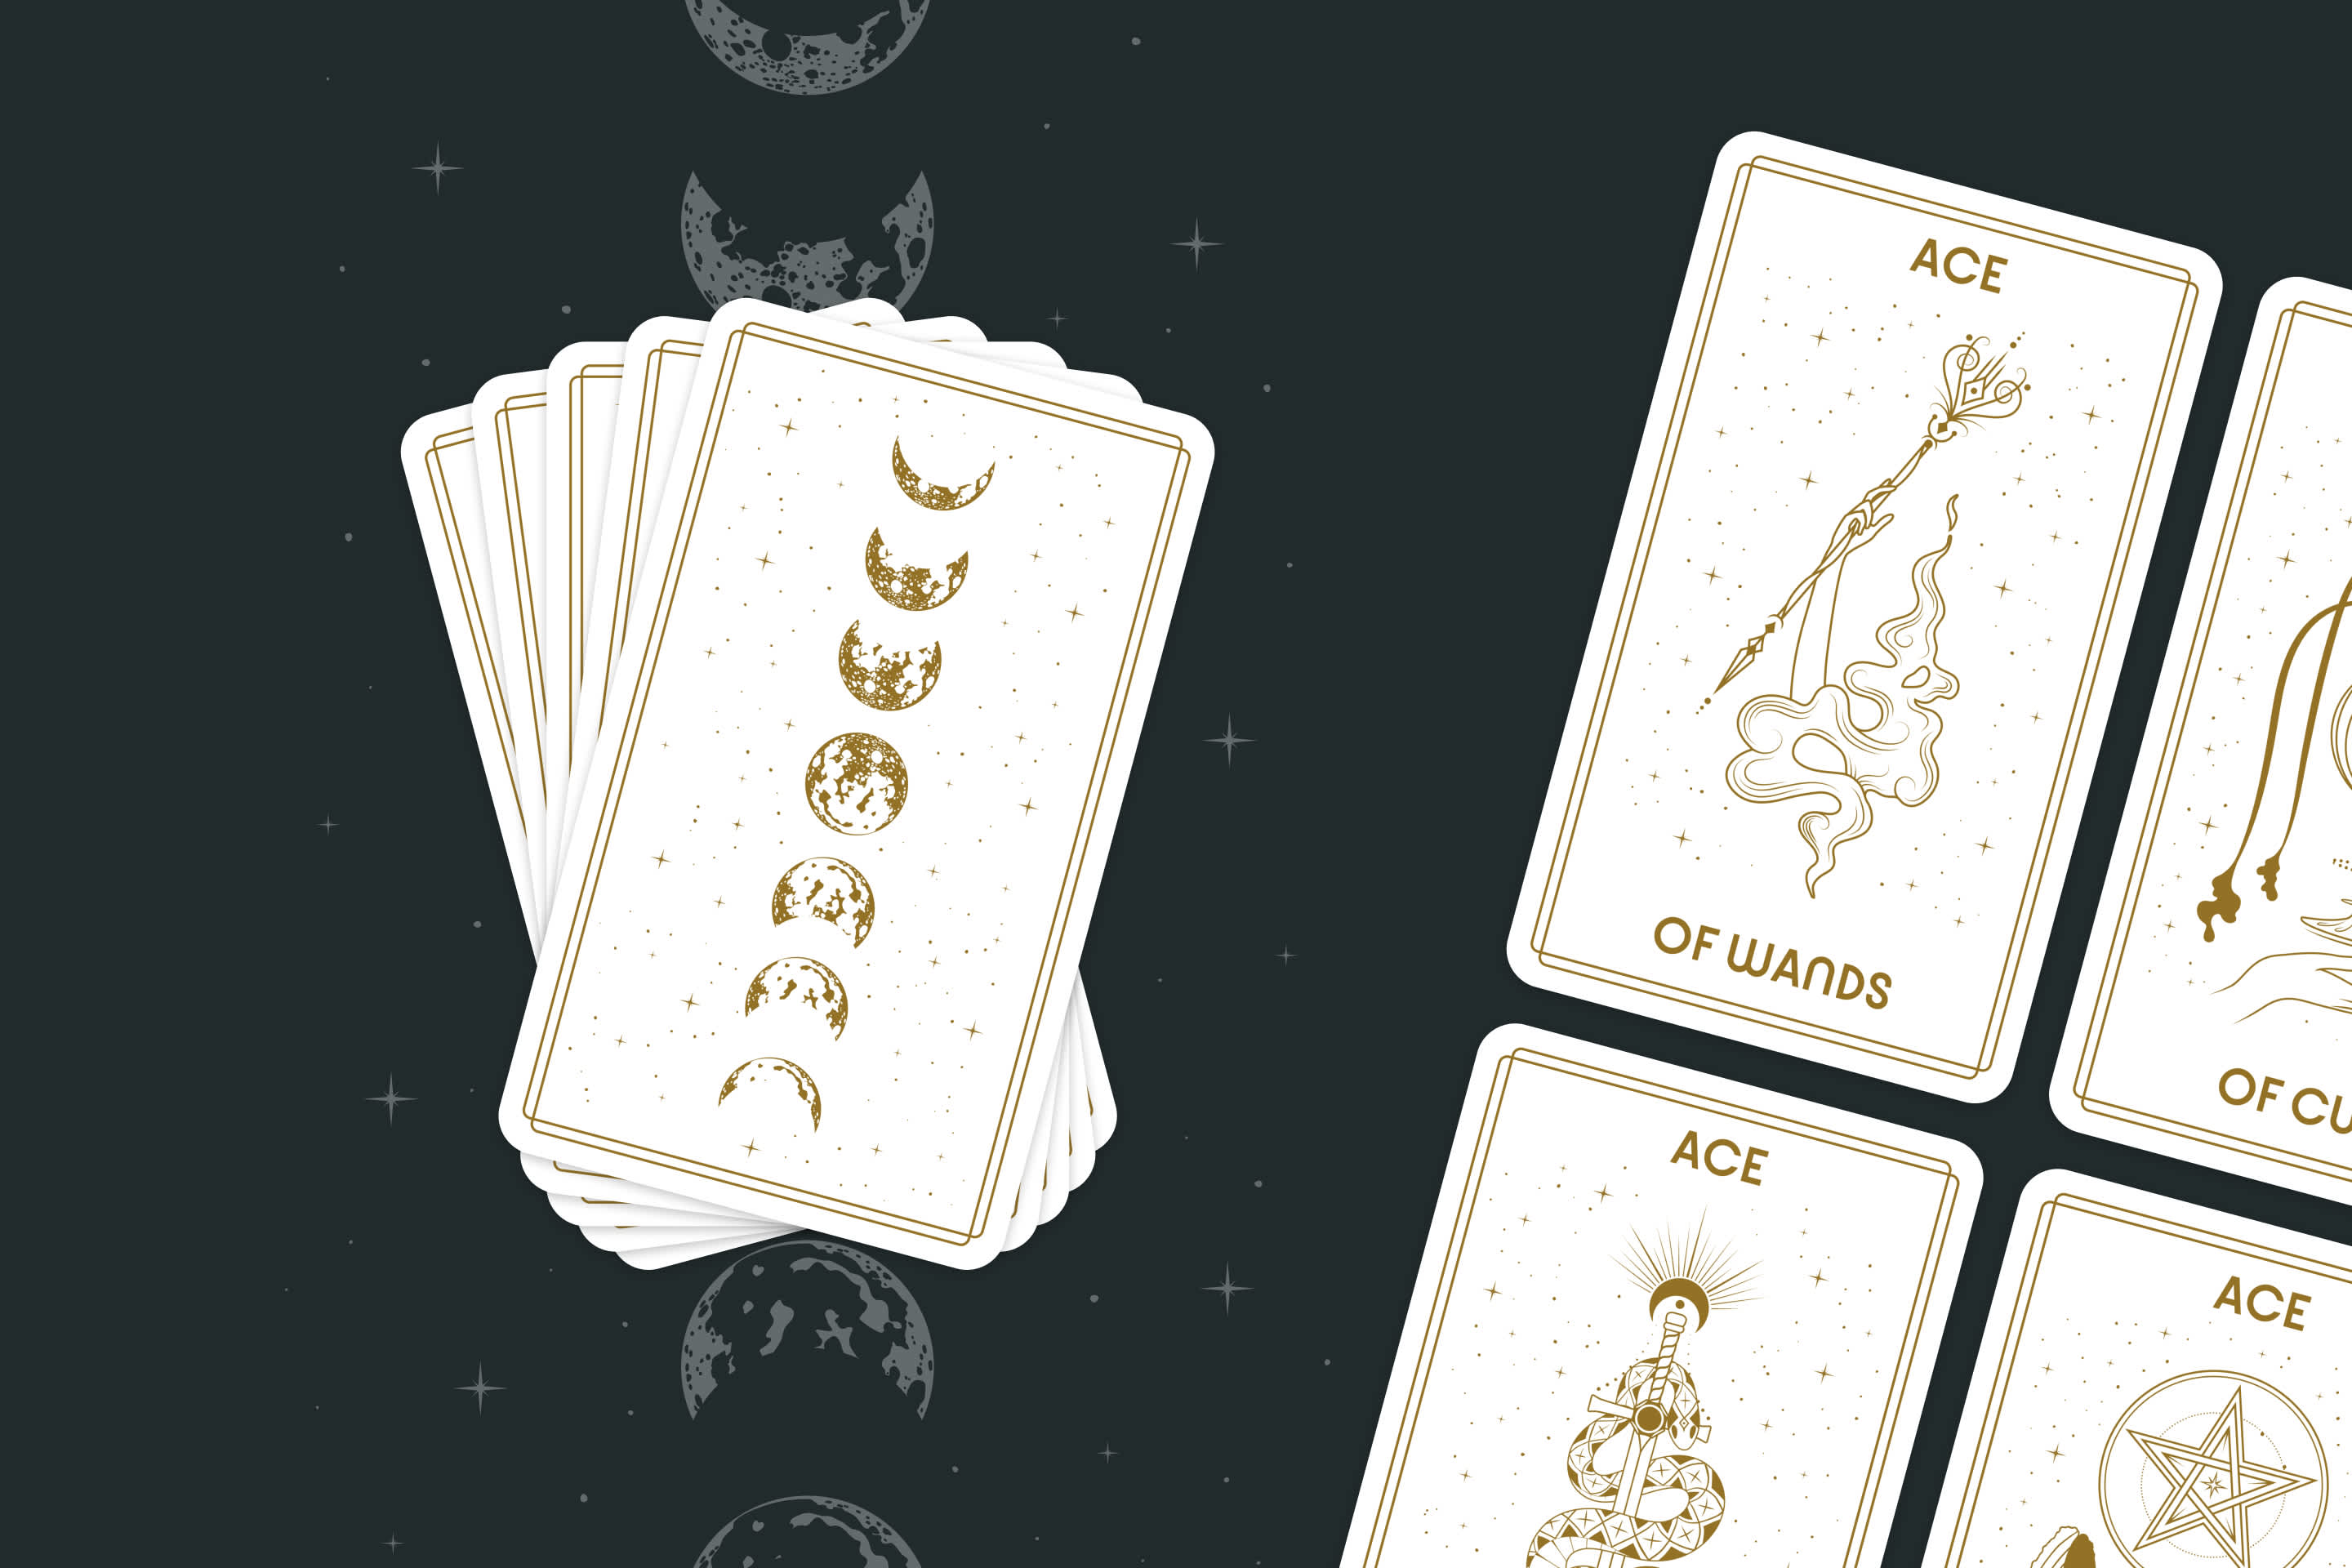 Minor Arcana Tarot Cards: Meanings and Keywords